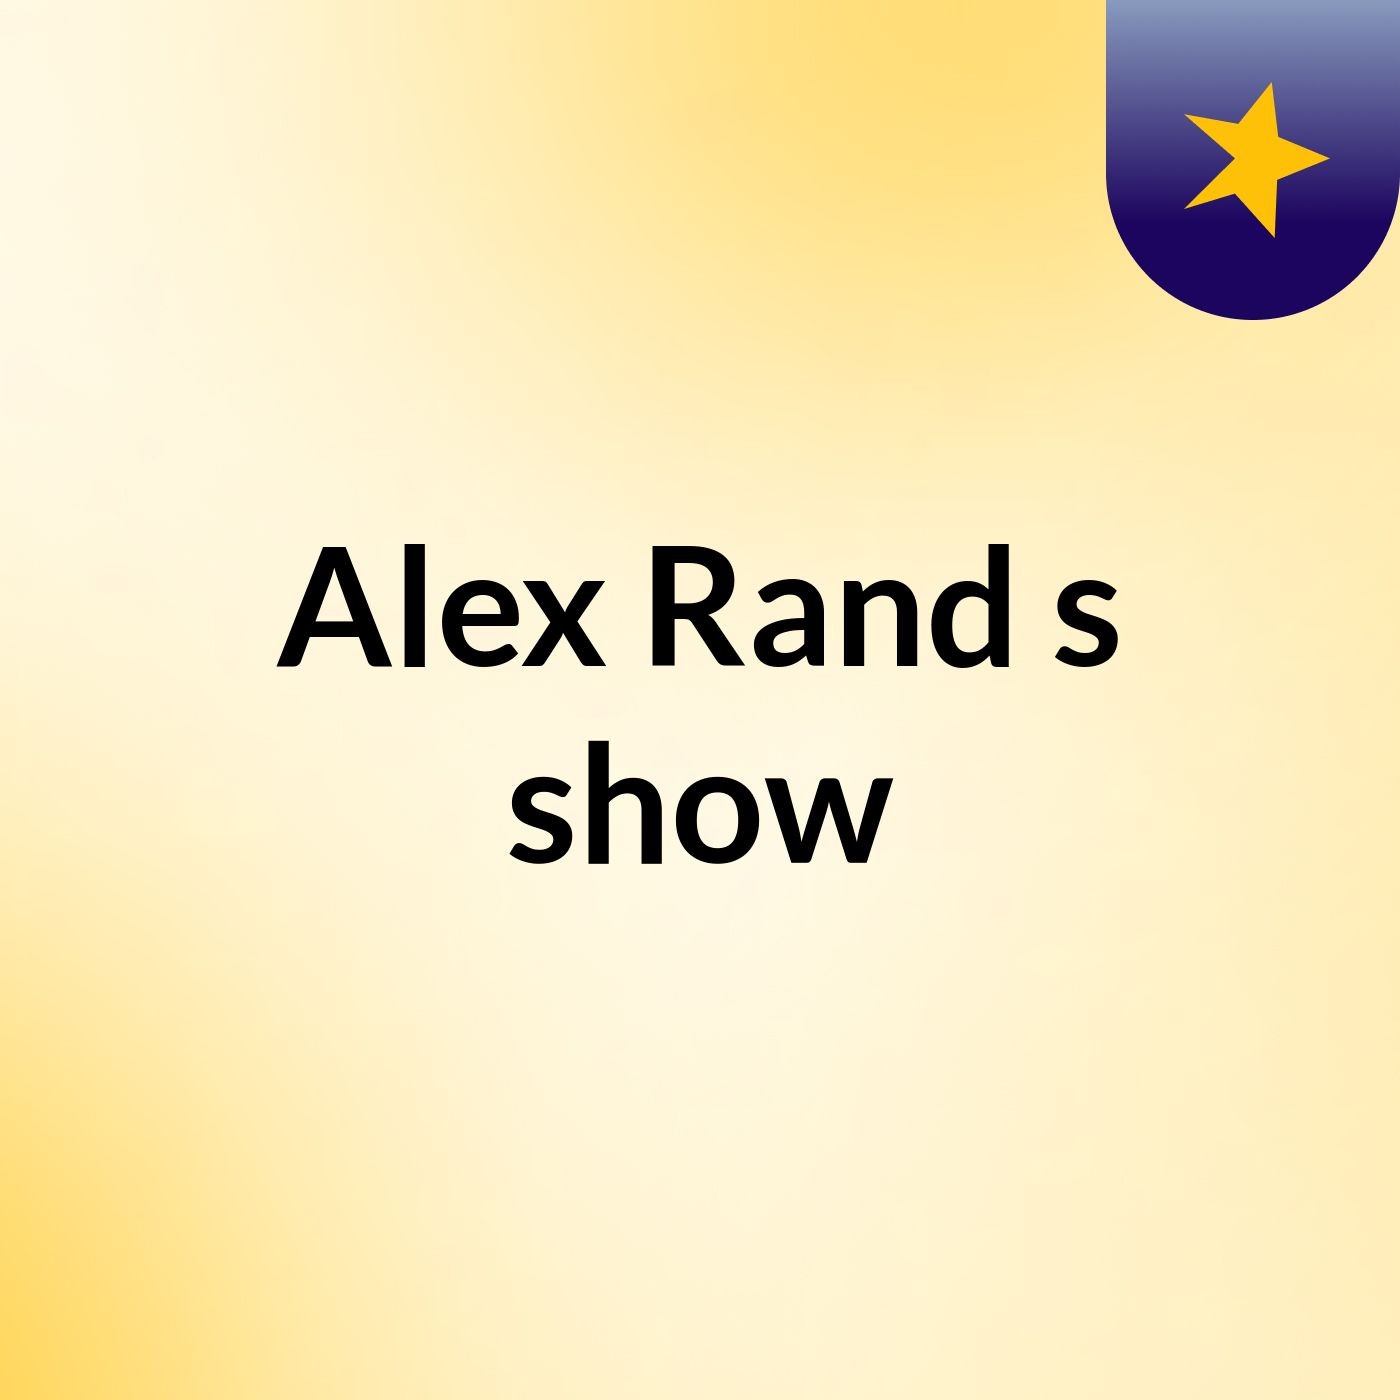 Alex Rand's show